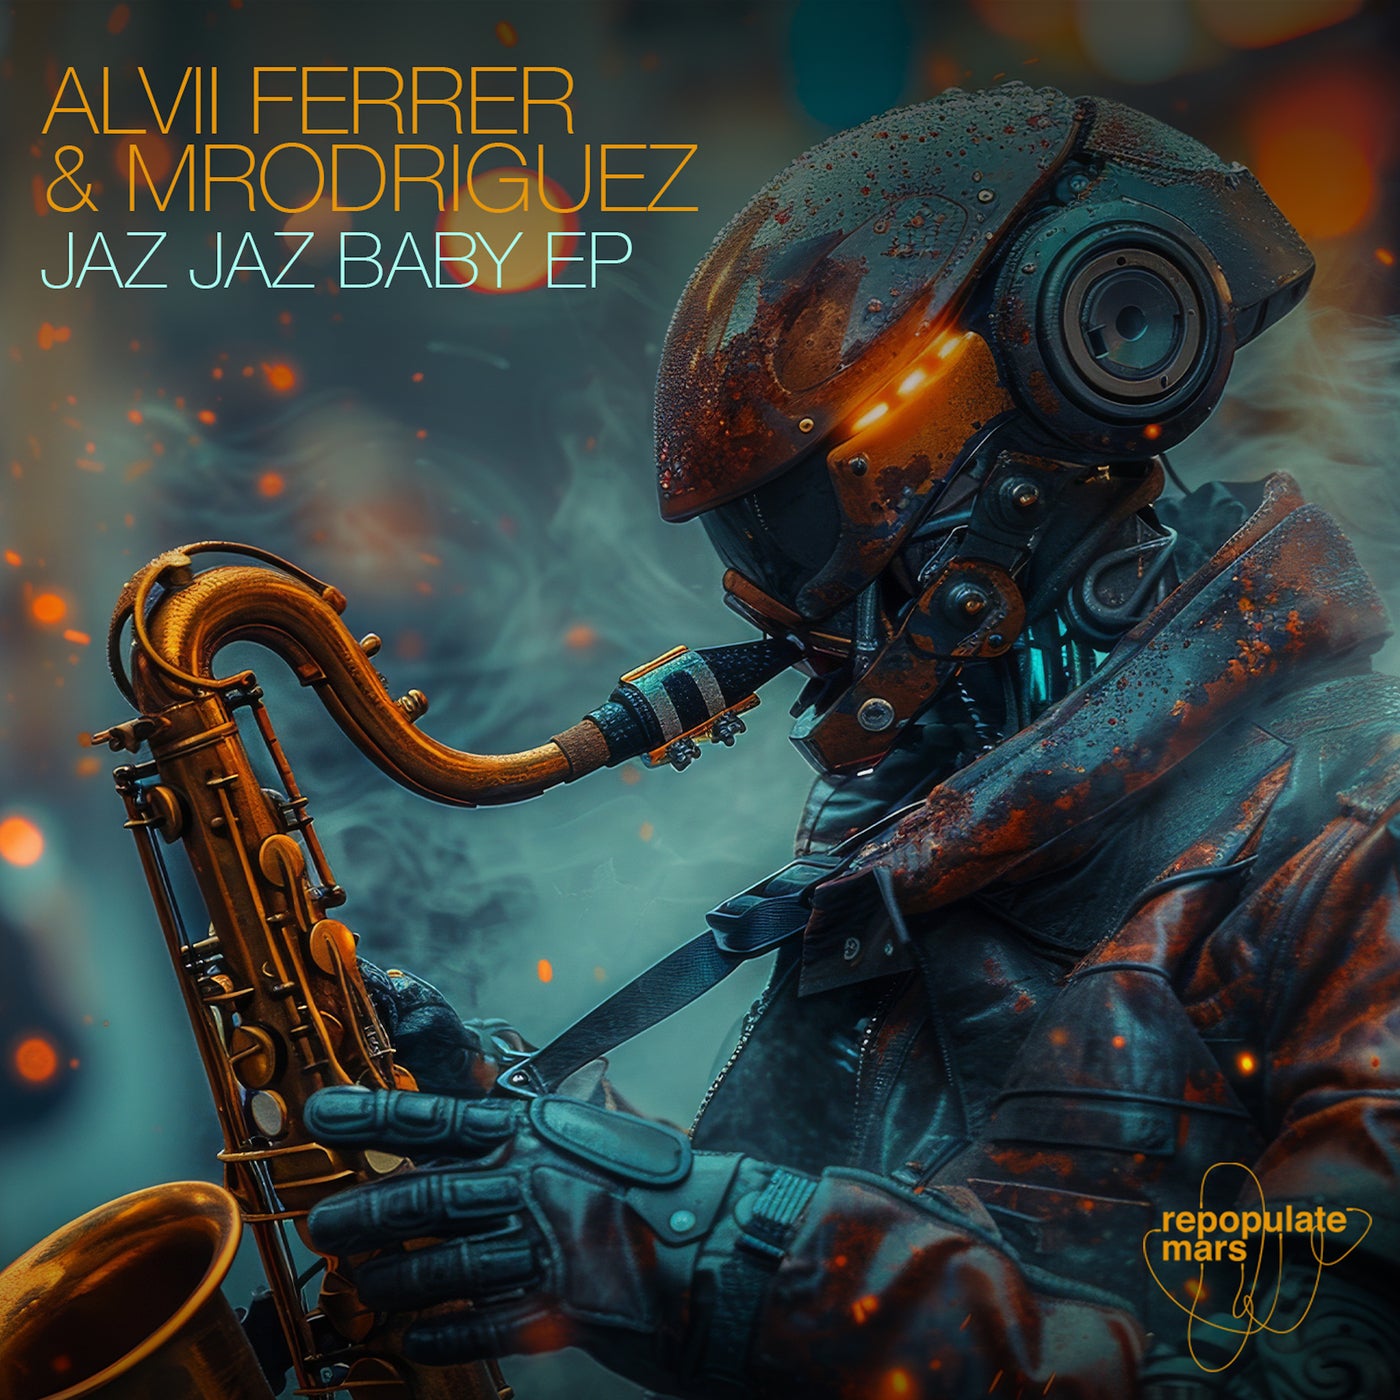 image cover: Mrodriguez & Alvii Ferrer - Jaz Jaz Baby EP on Repopulate Mars